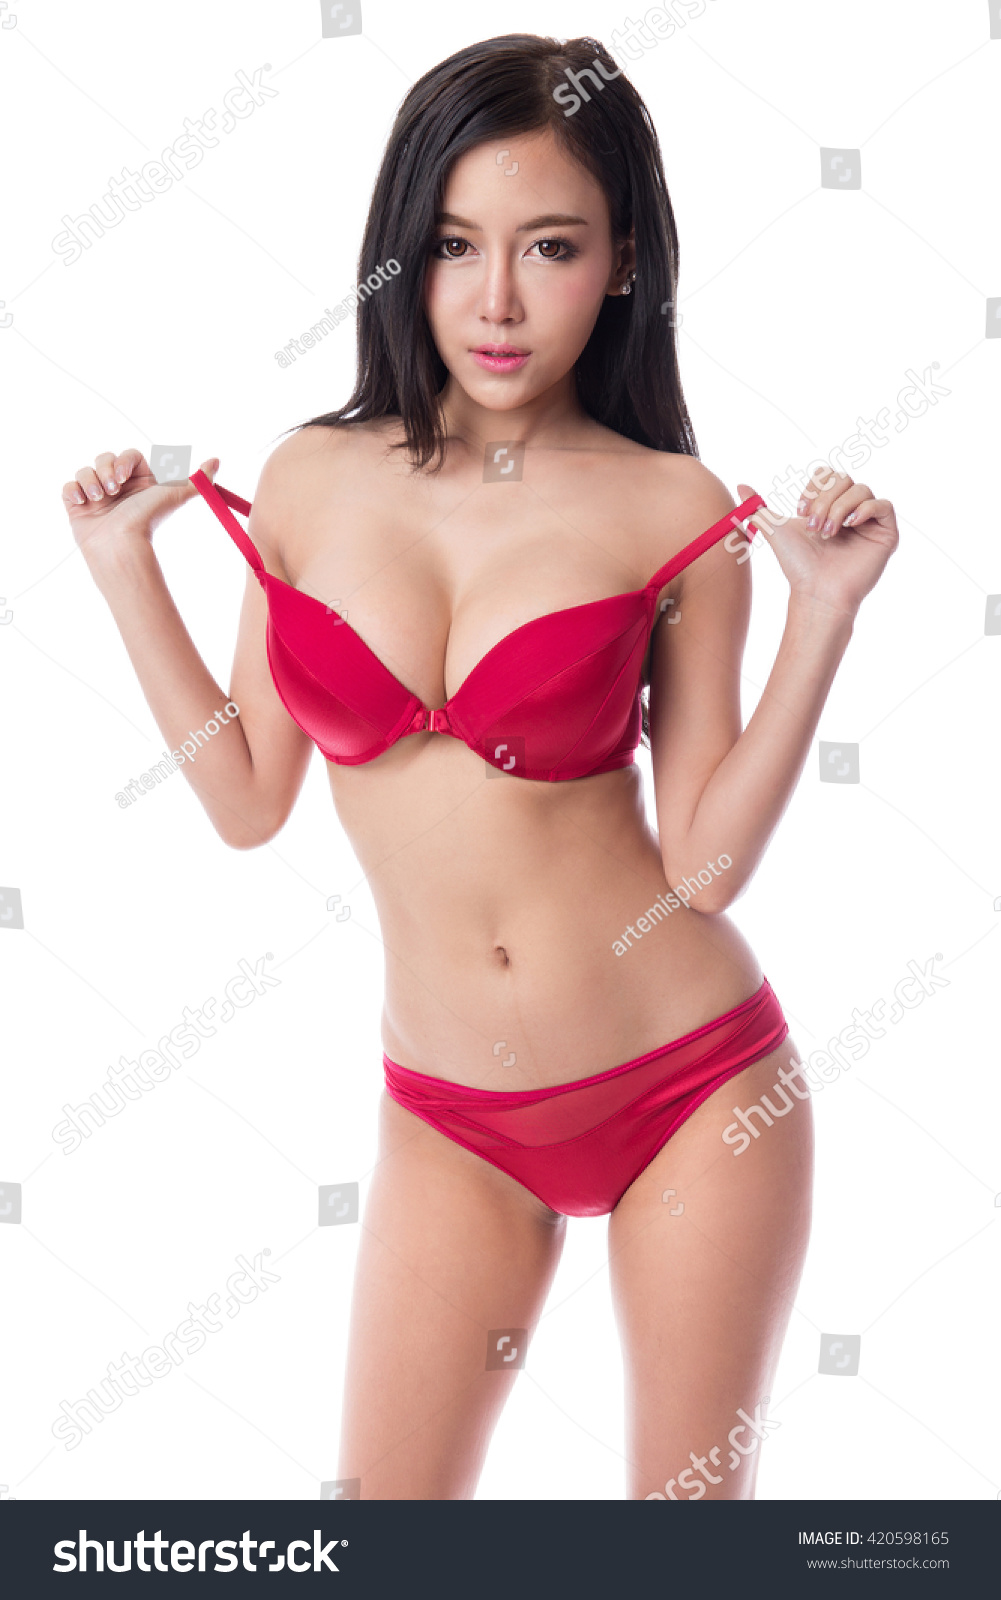 debaditya mukhopadhyay recommends asian girls showing their panties pic